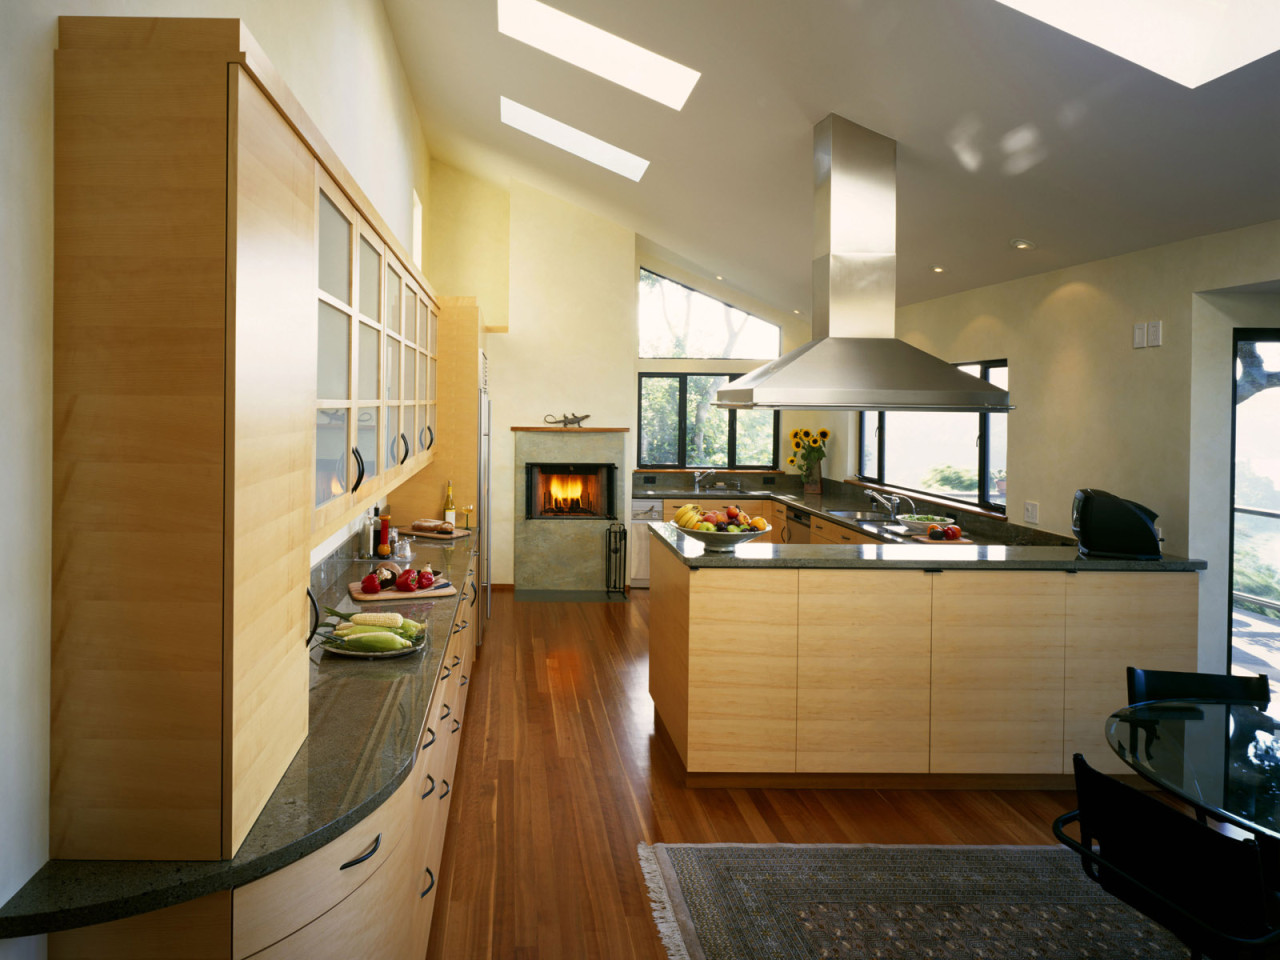 modern home interior design ideas